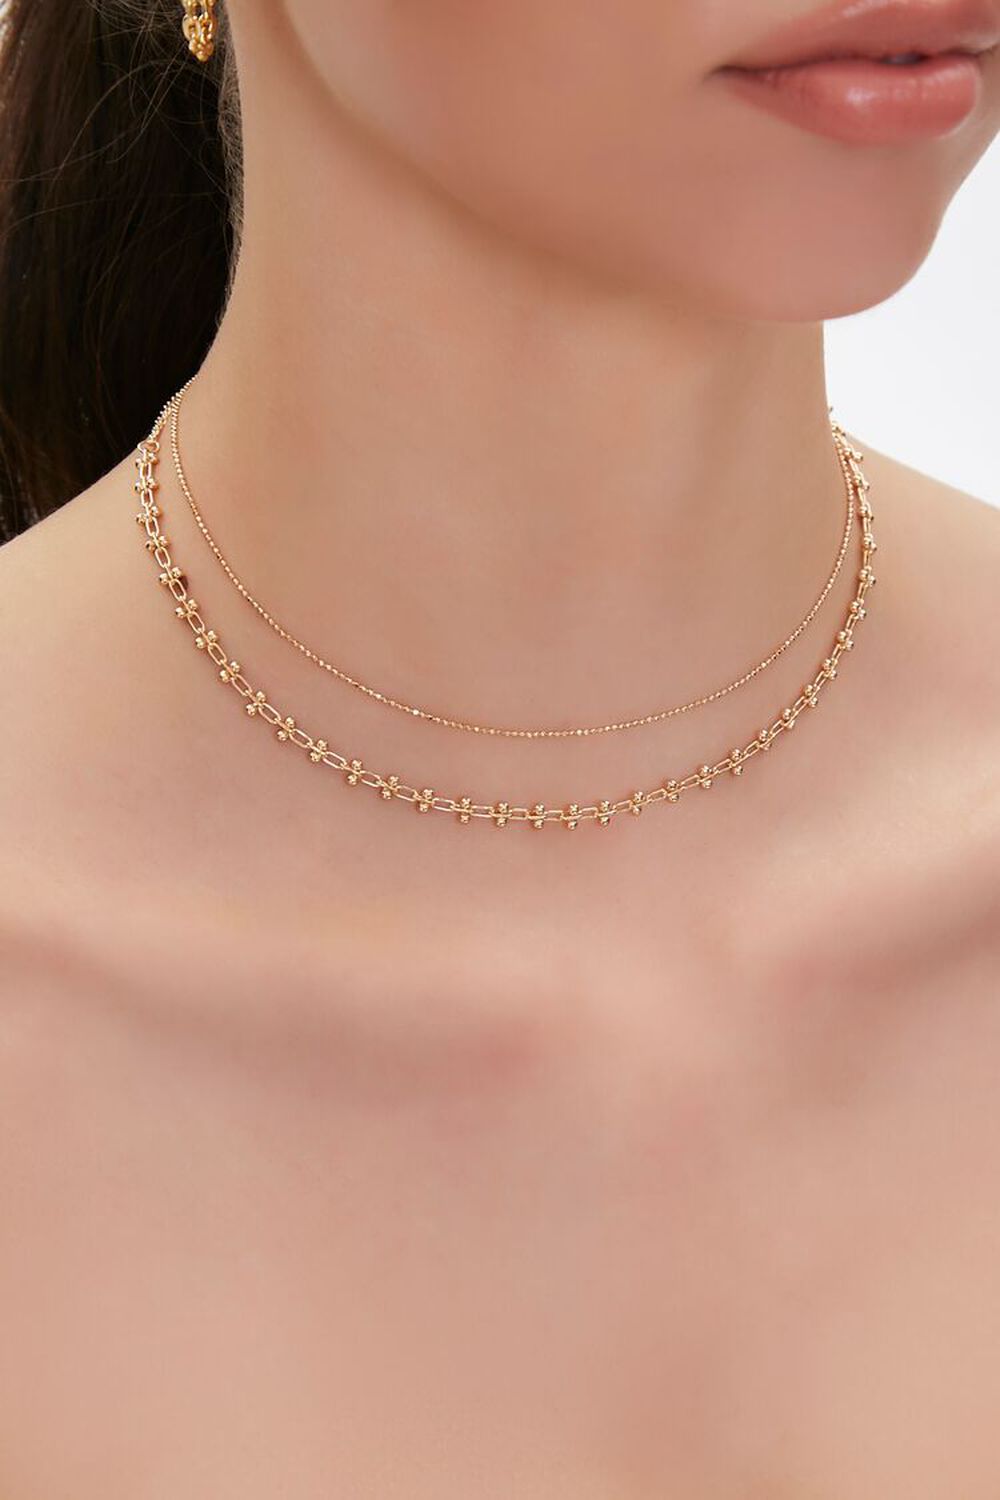 GOLD Layered Chain Choker Necklace, image 1